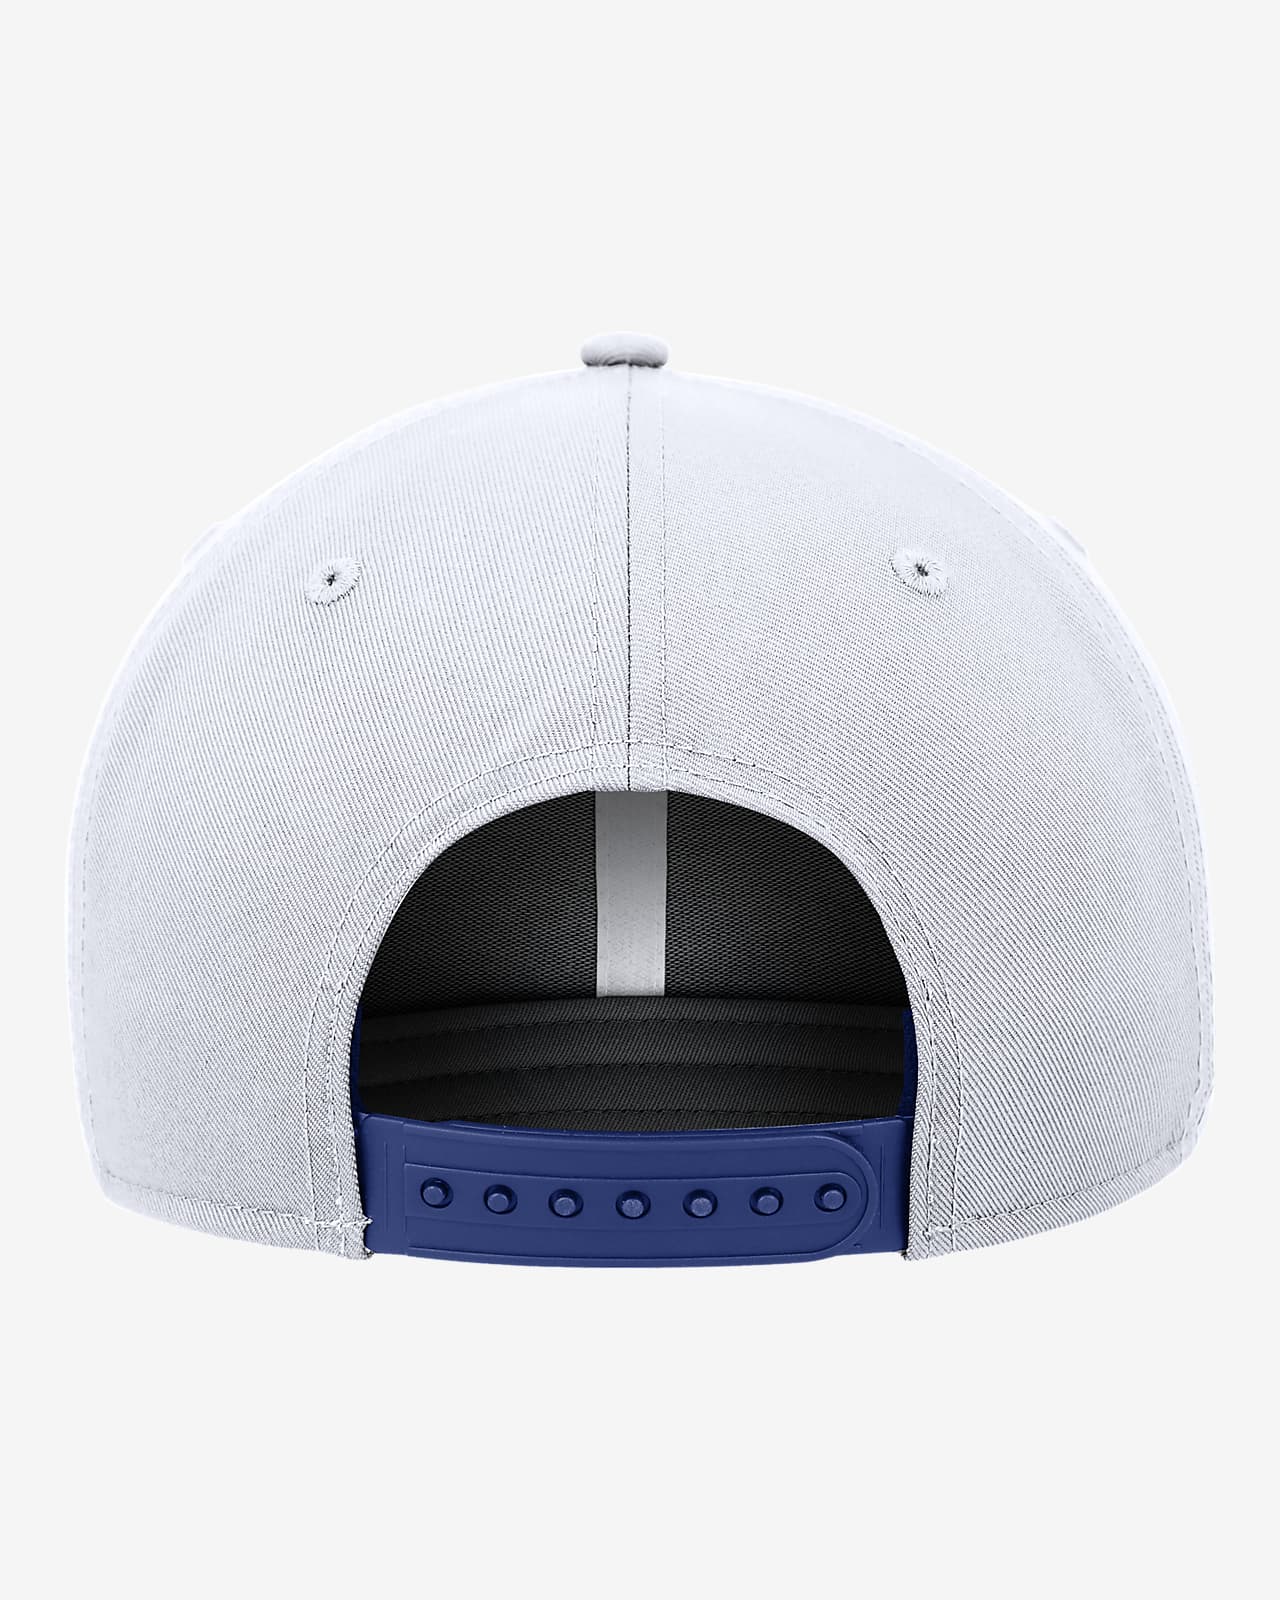 Toronto Blue Jays Classic99 Color Block Men's Nike MLB Adjustable Hat.